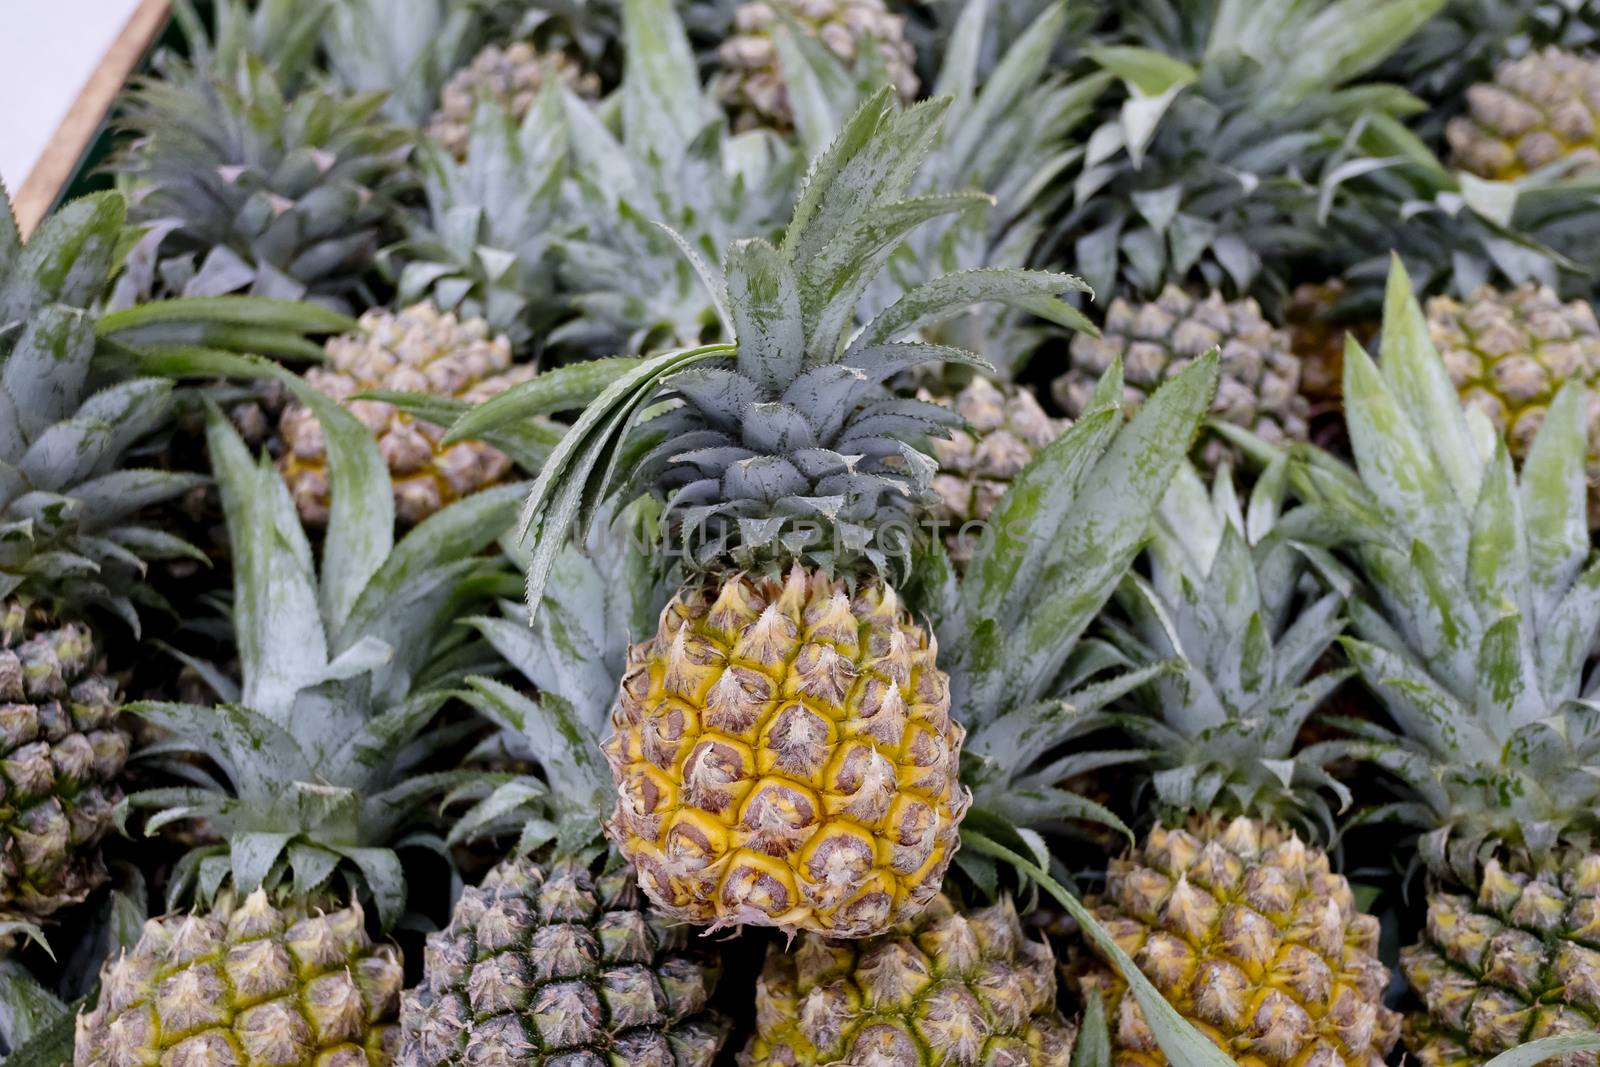 pineapples in market by art9858